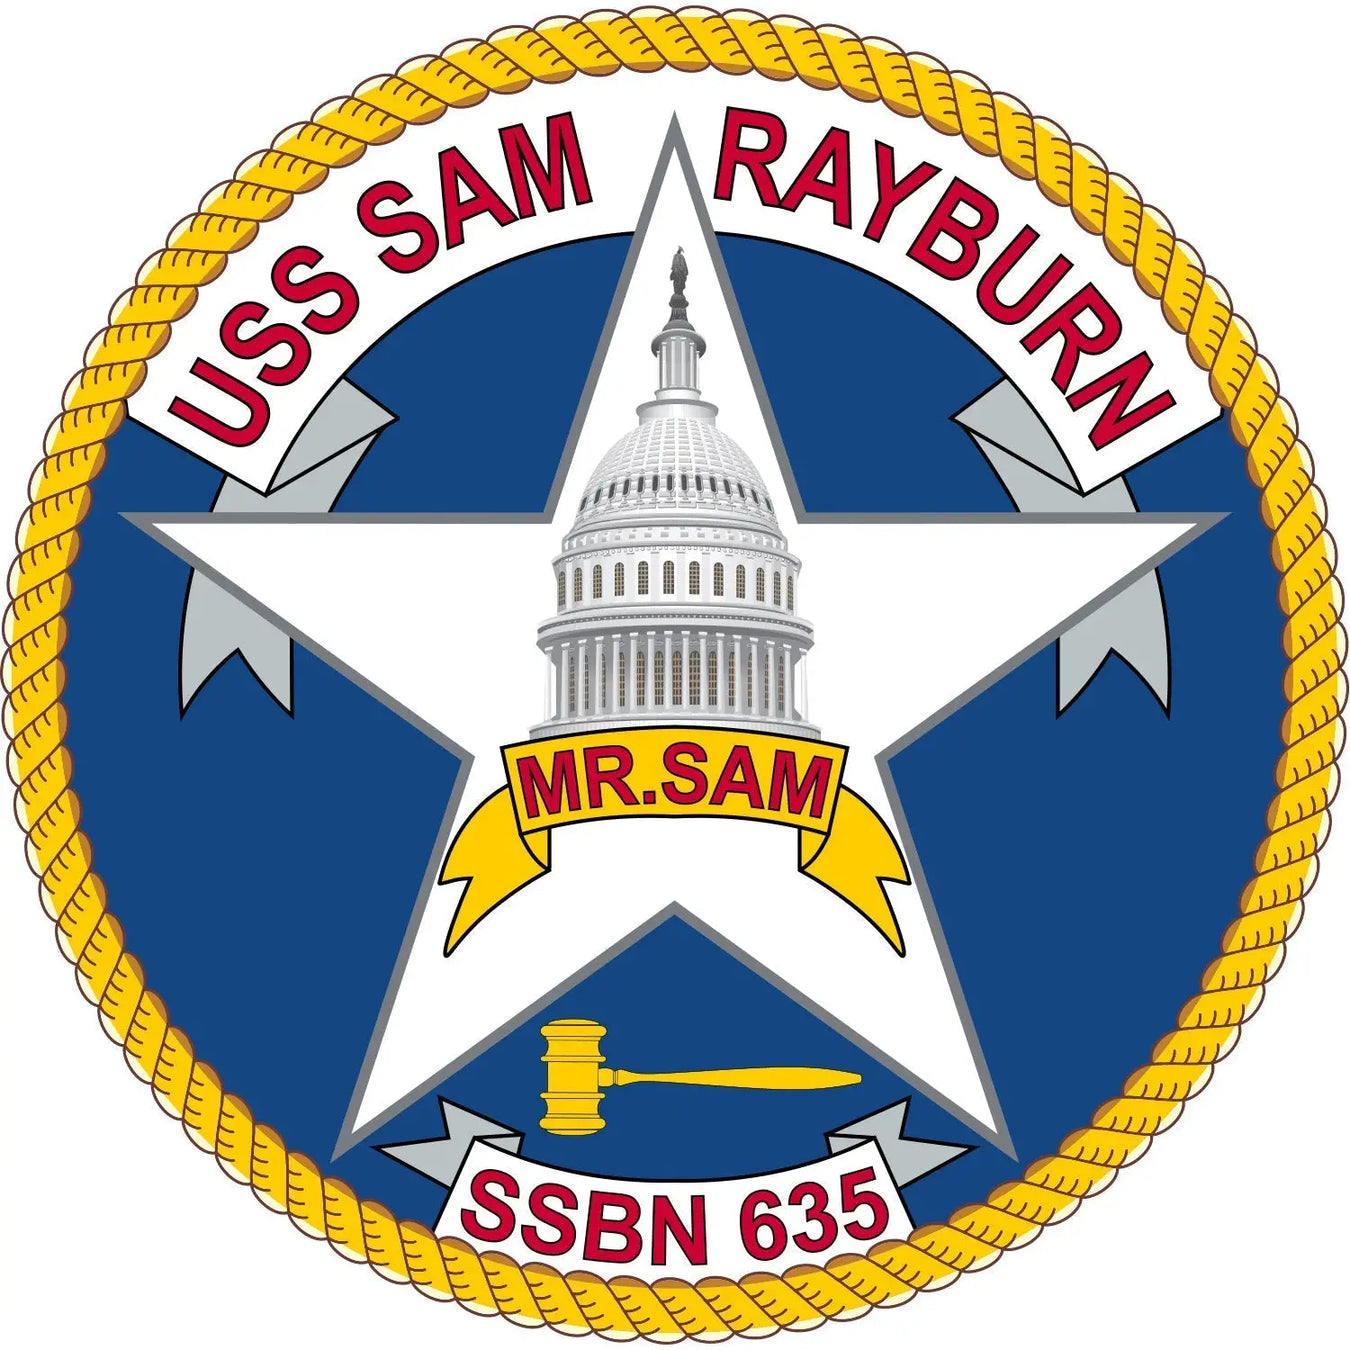 USS Sam Rayburn (SSBN-635) logo